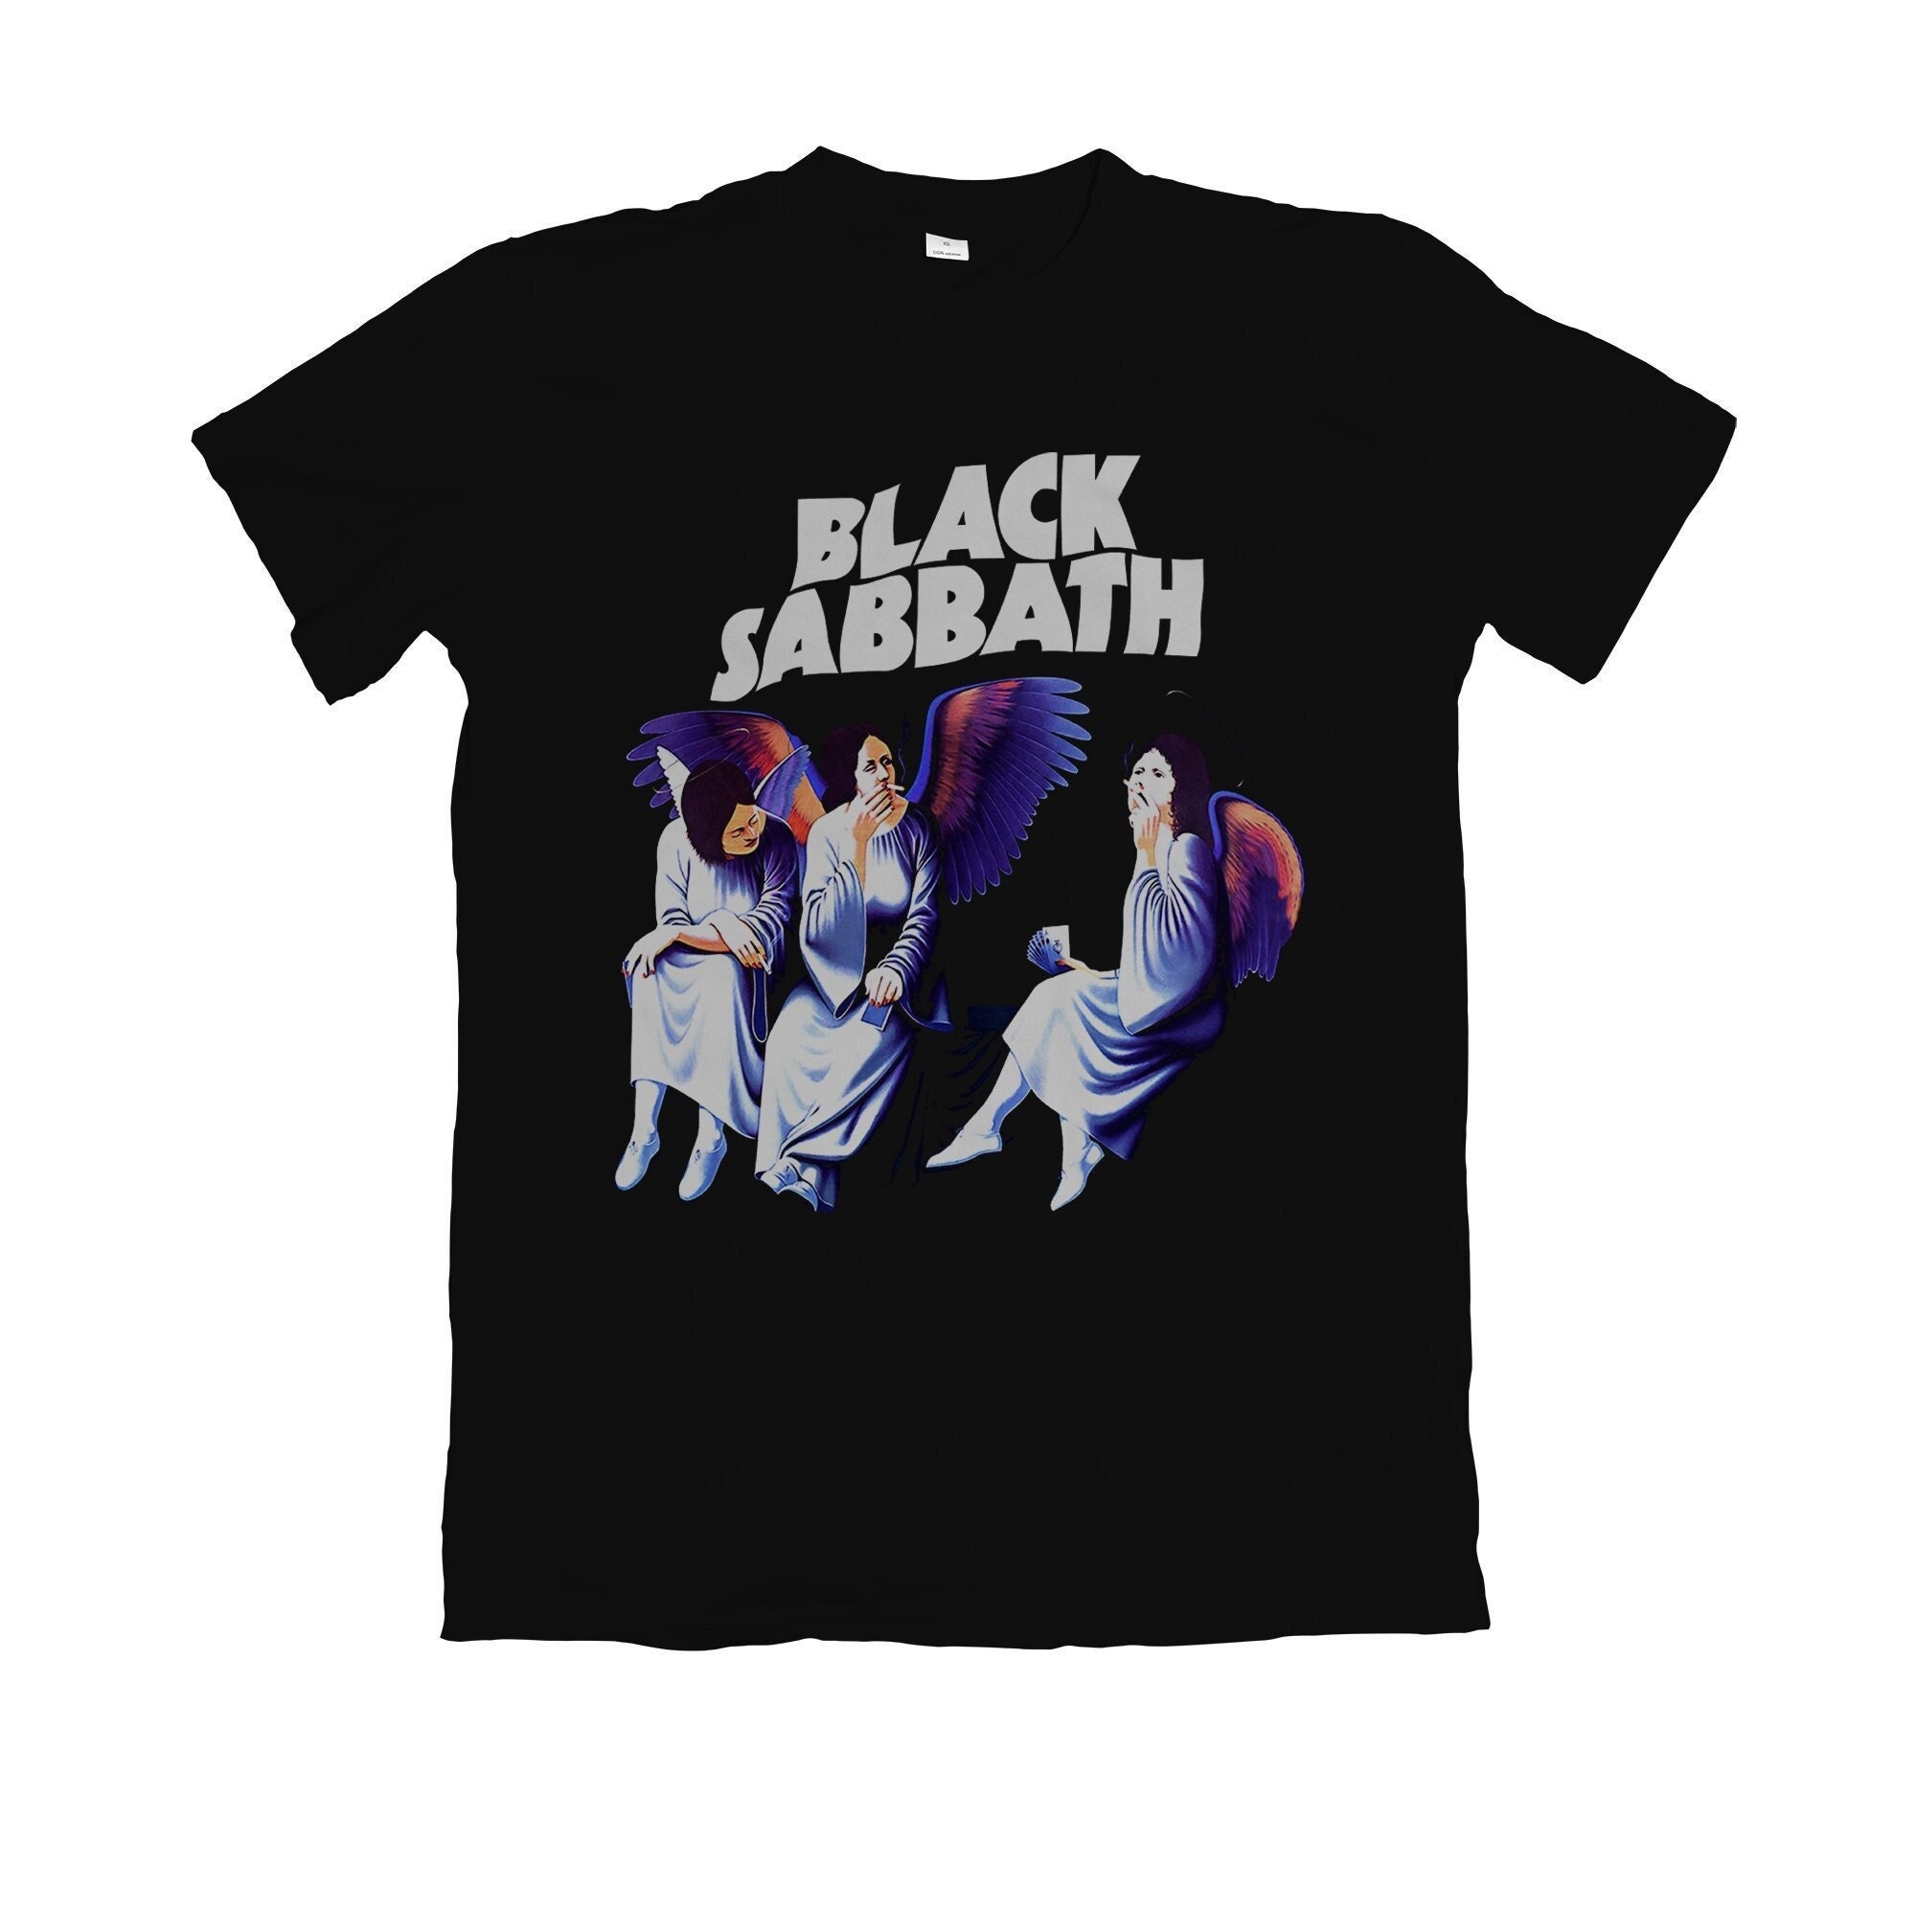 Discover BLACK SABBATH heaven and hell T-shirt - Black Sabbath - Metal - Punk - Music Shirt